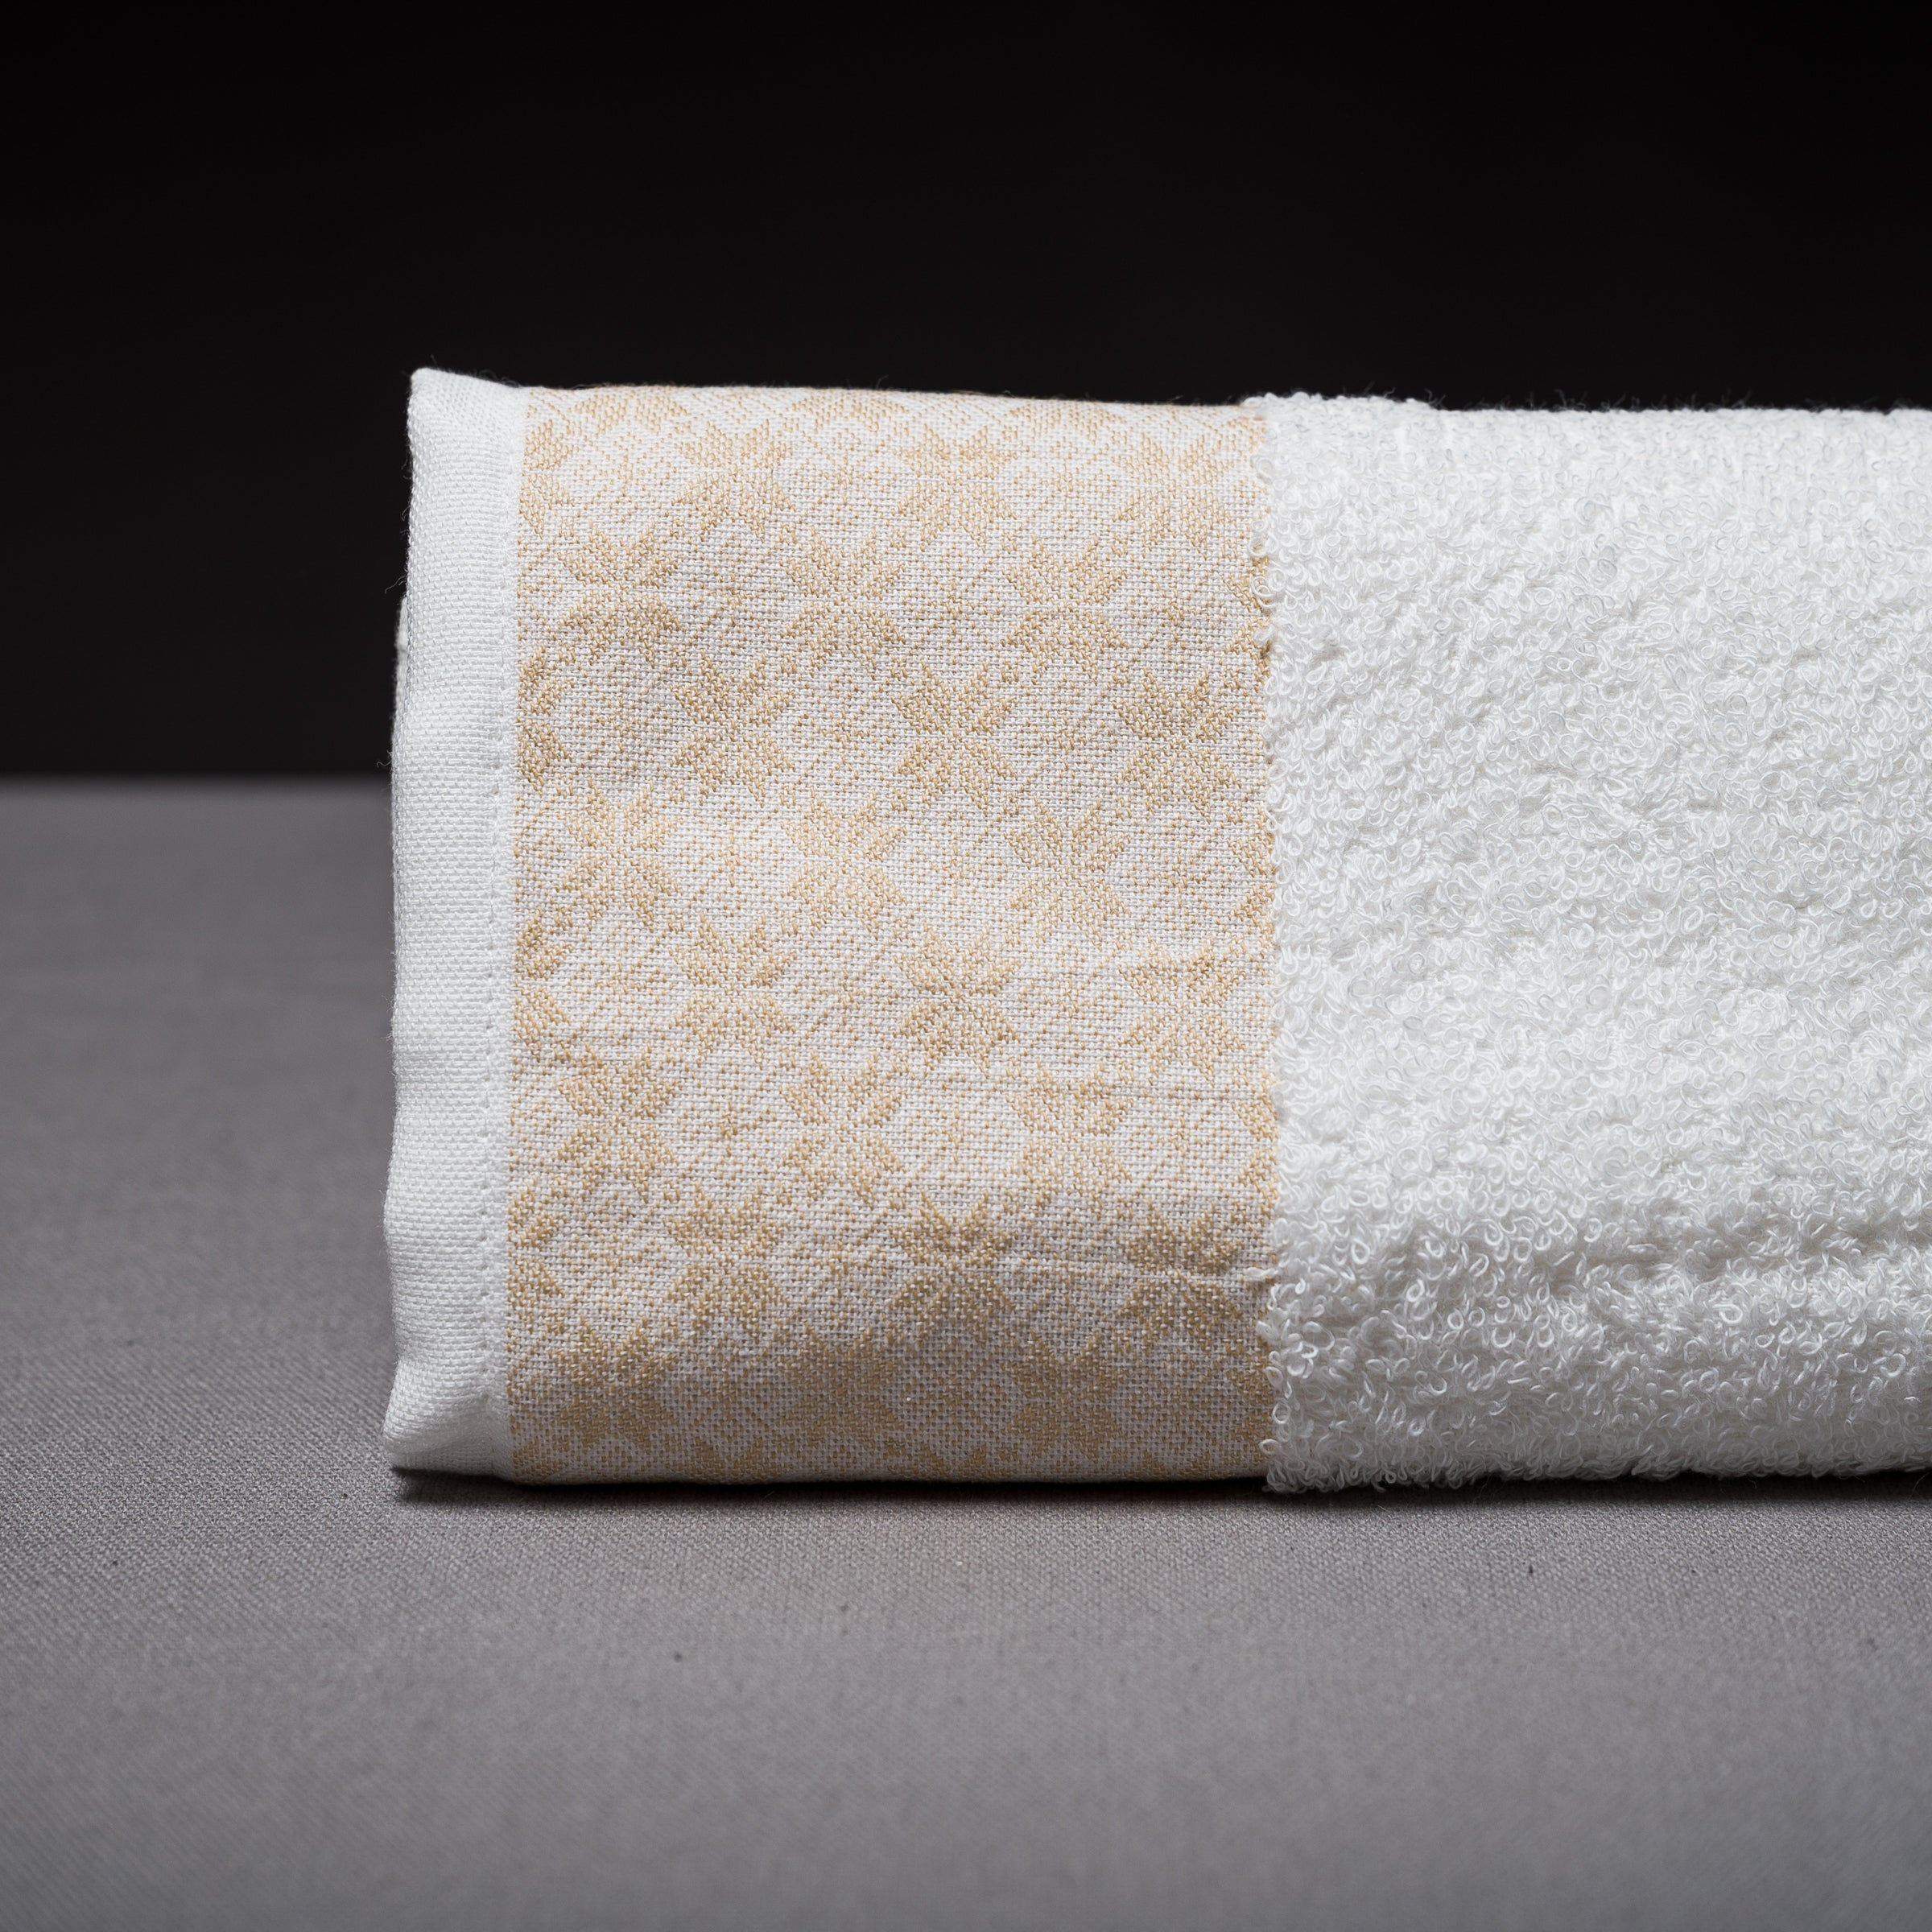 Fukuroya Towel - Hand Towel - 5 Colours / ふくろやタオル